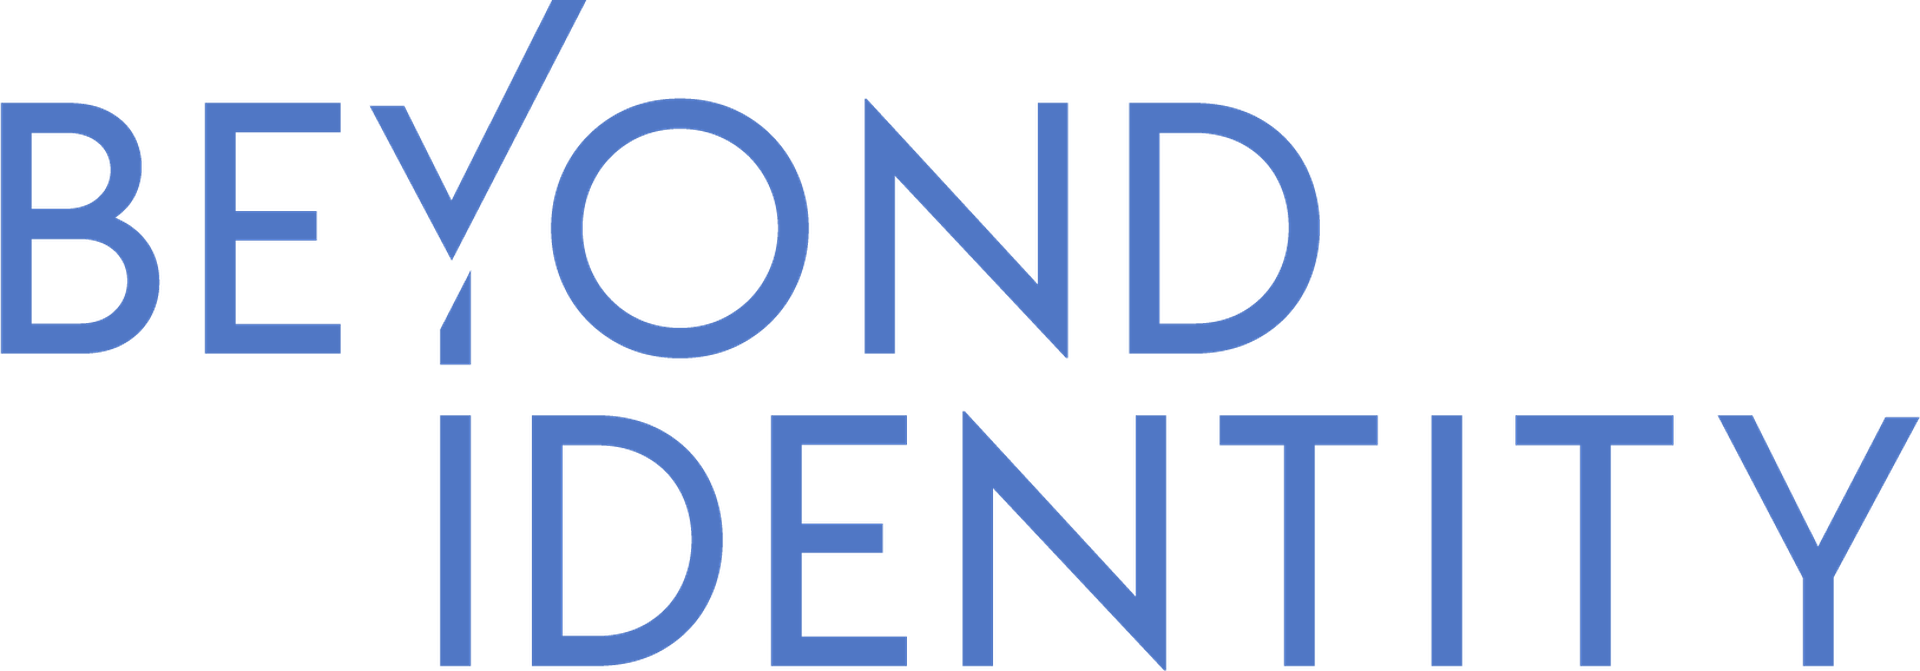 Beyond Identity logo